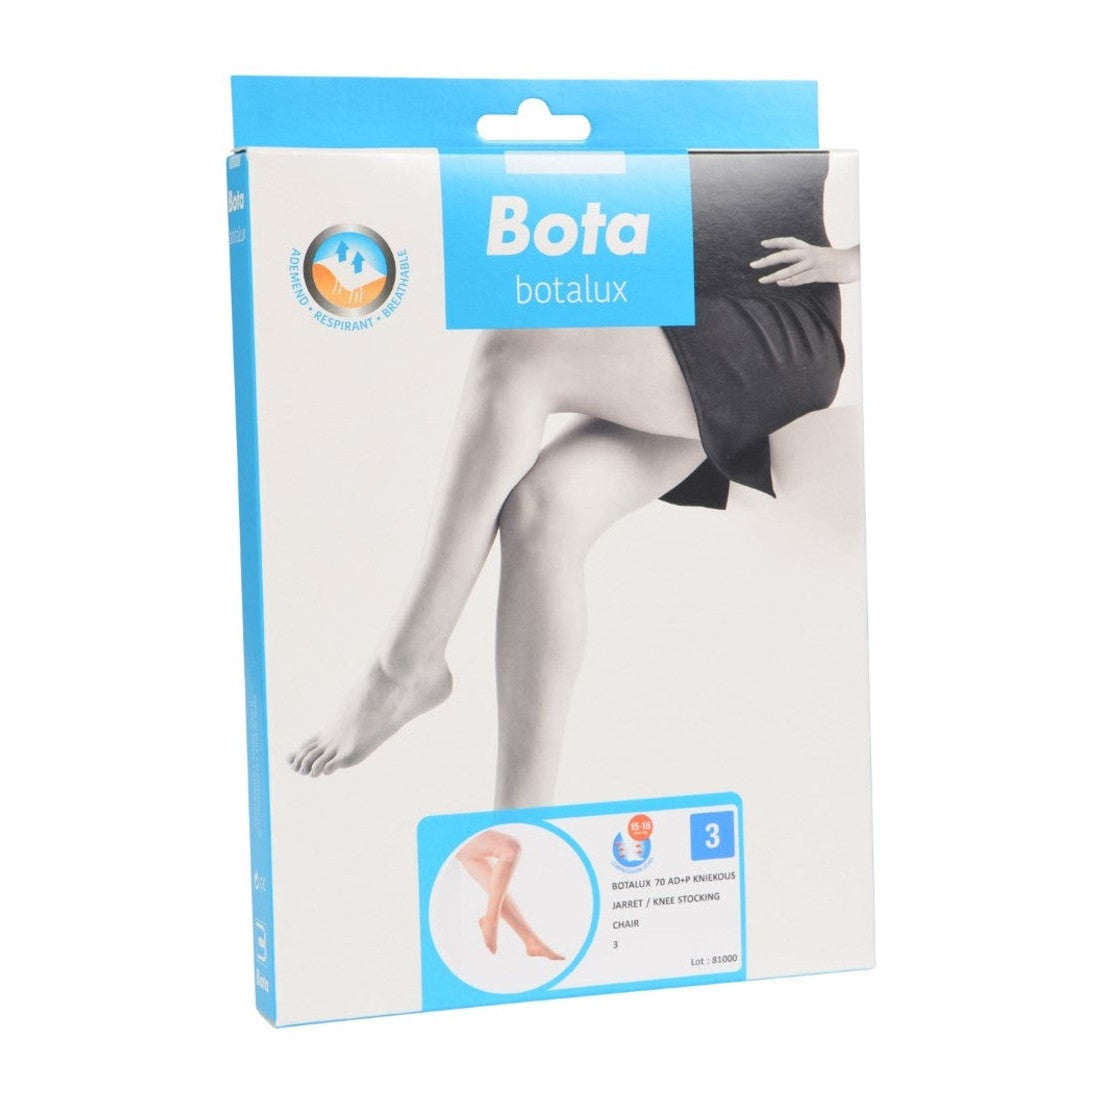 Botalux 70 below knee ad+p ch skin color